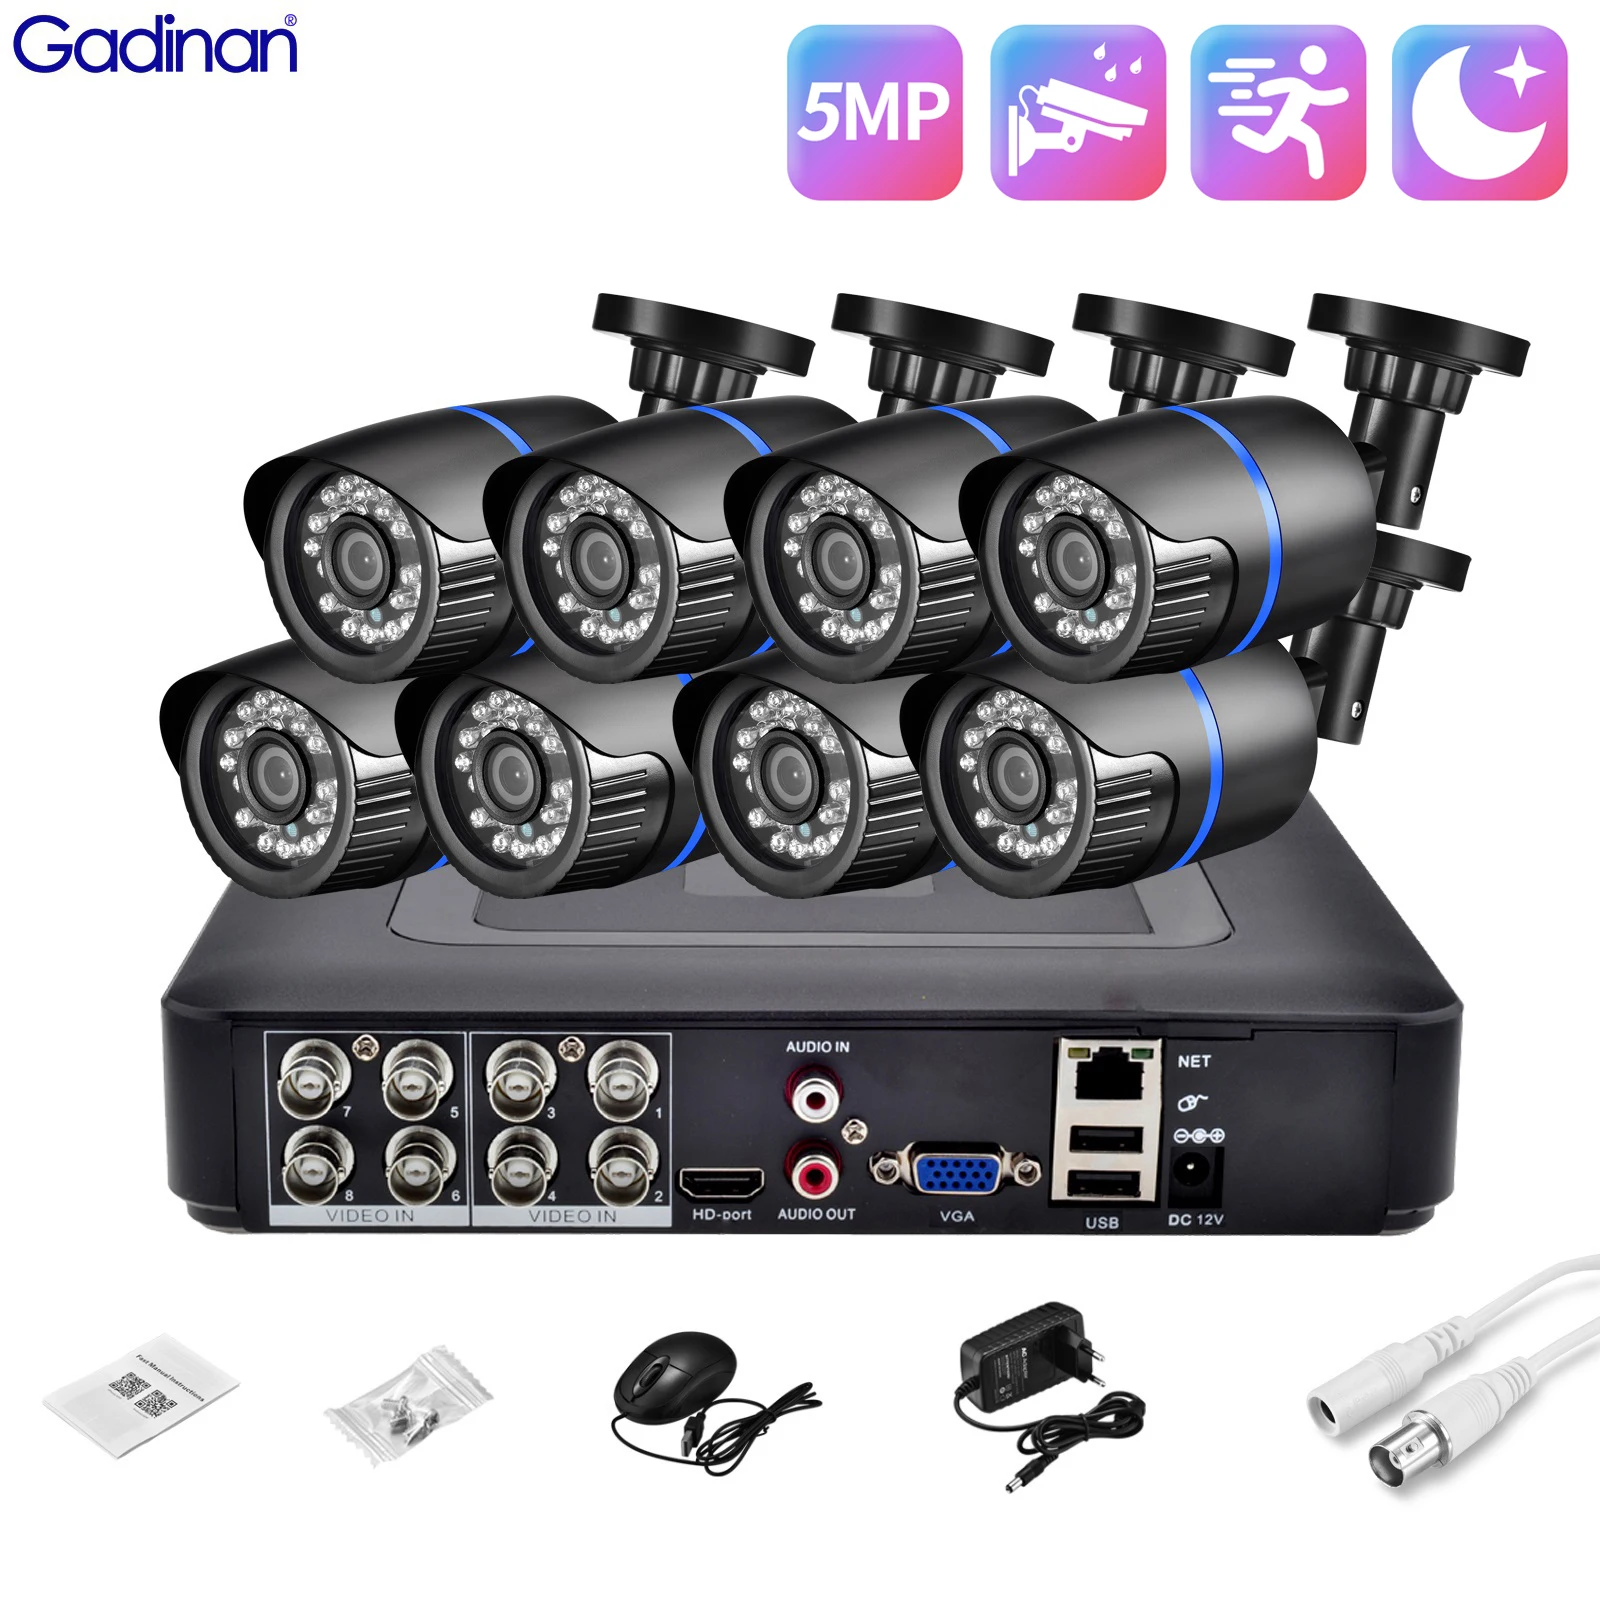 

Gadinan AHD 3.6mm HD lens Bullet Video Surveillance 5MP 1080P CCTV Camera Security System Kit 8/4CH DVR Waterproof Security Came